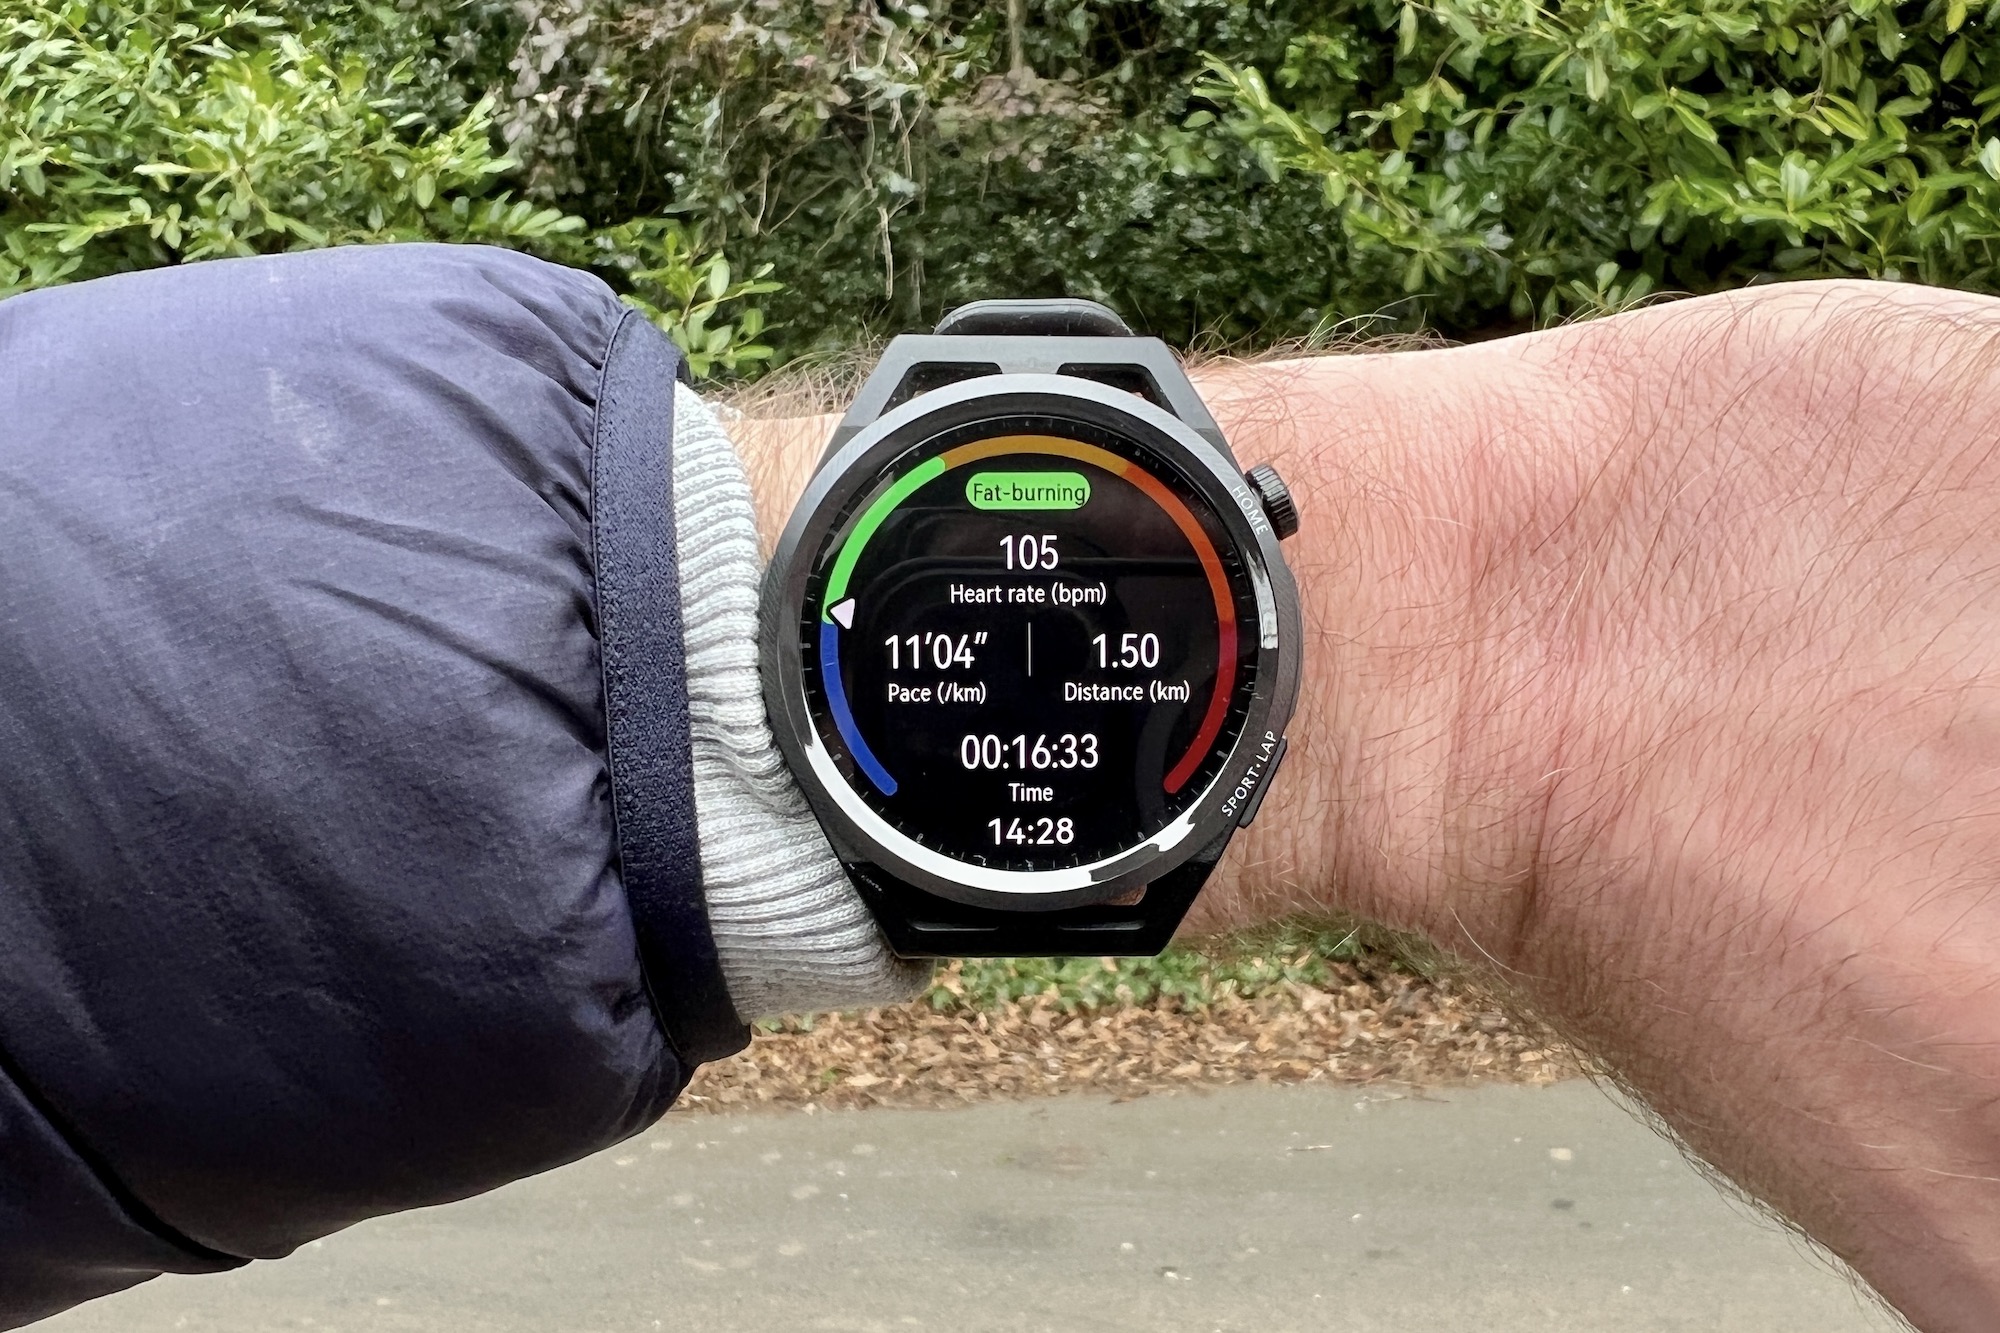 Huawei Watch GT Runner showing workout data.